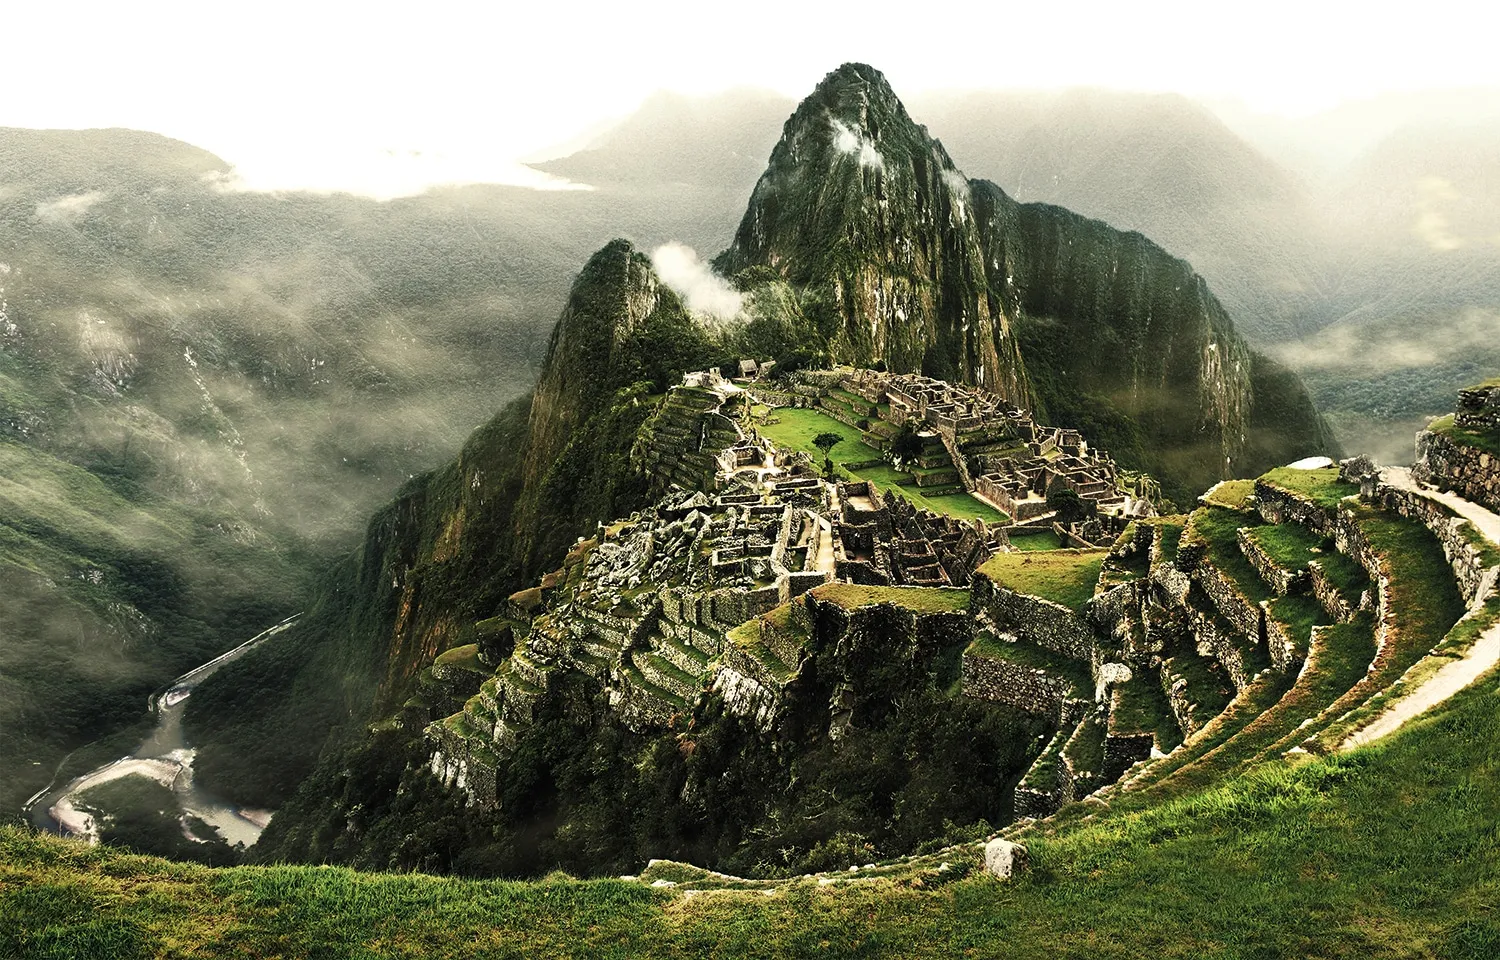 PAPERMOON Fototapete "Machu Picchu" Tapeten Gr. B/L: 4 m x 2,6 m, Bahnen: 8 St., bunt (mehrfarbig) Fototapeten